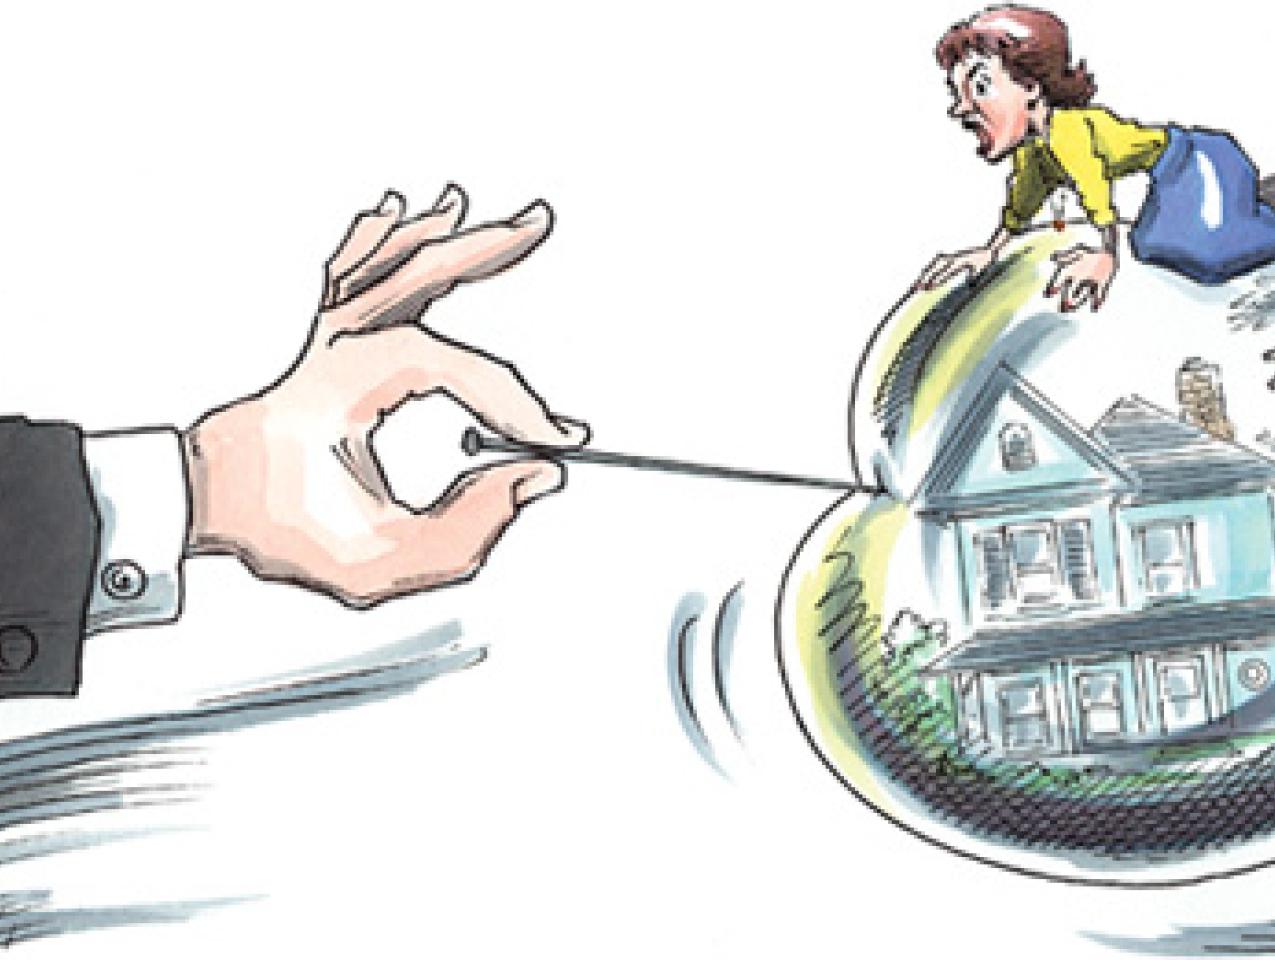 Subprime-mortgage meltdown by Becker